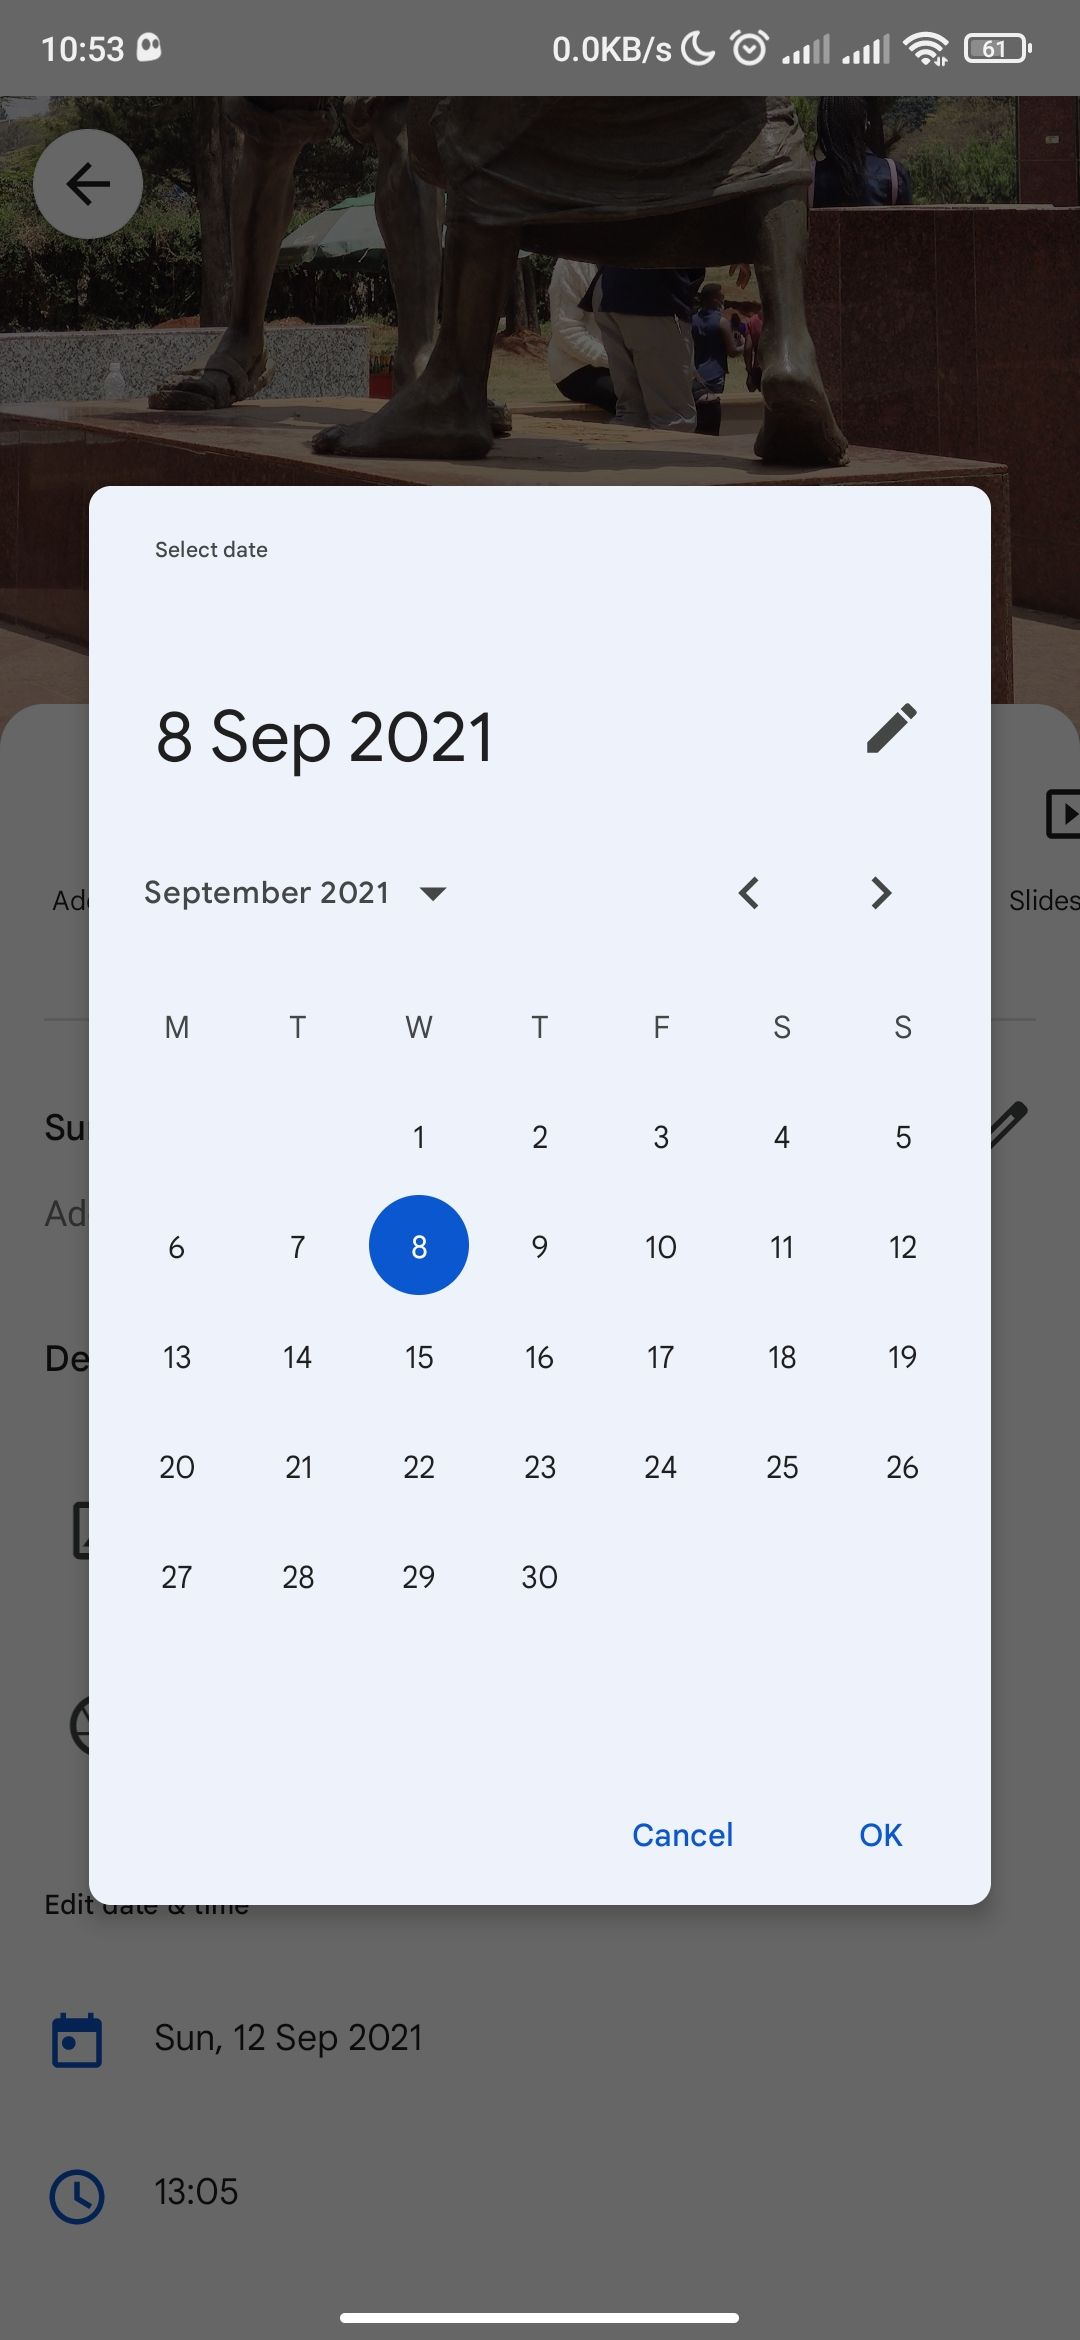 Date picker in Google Photos